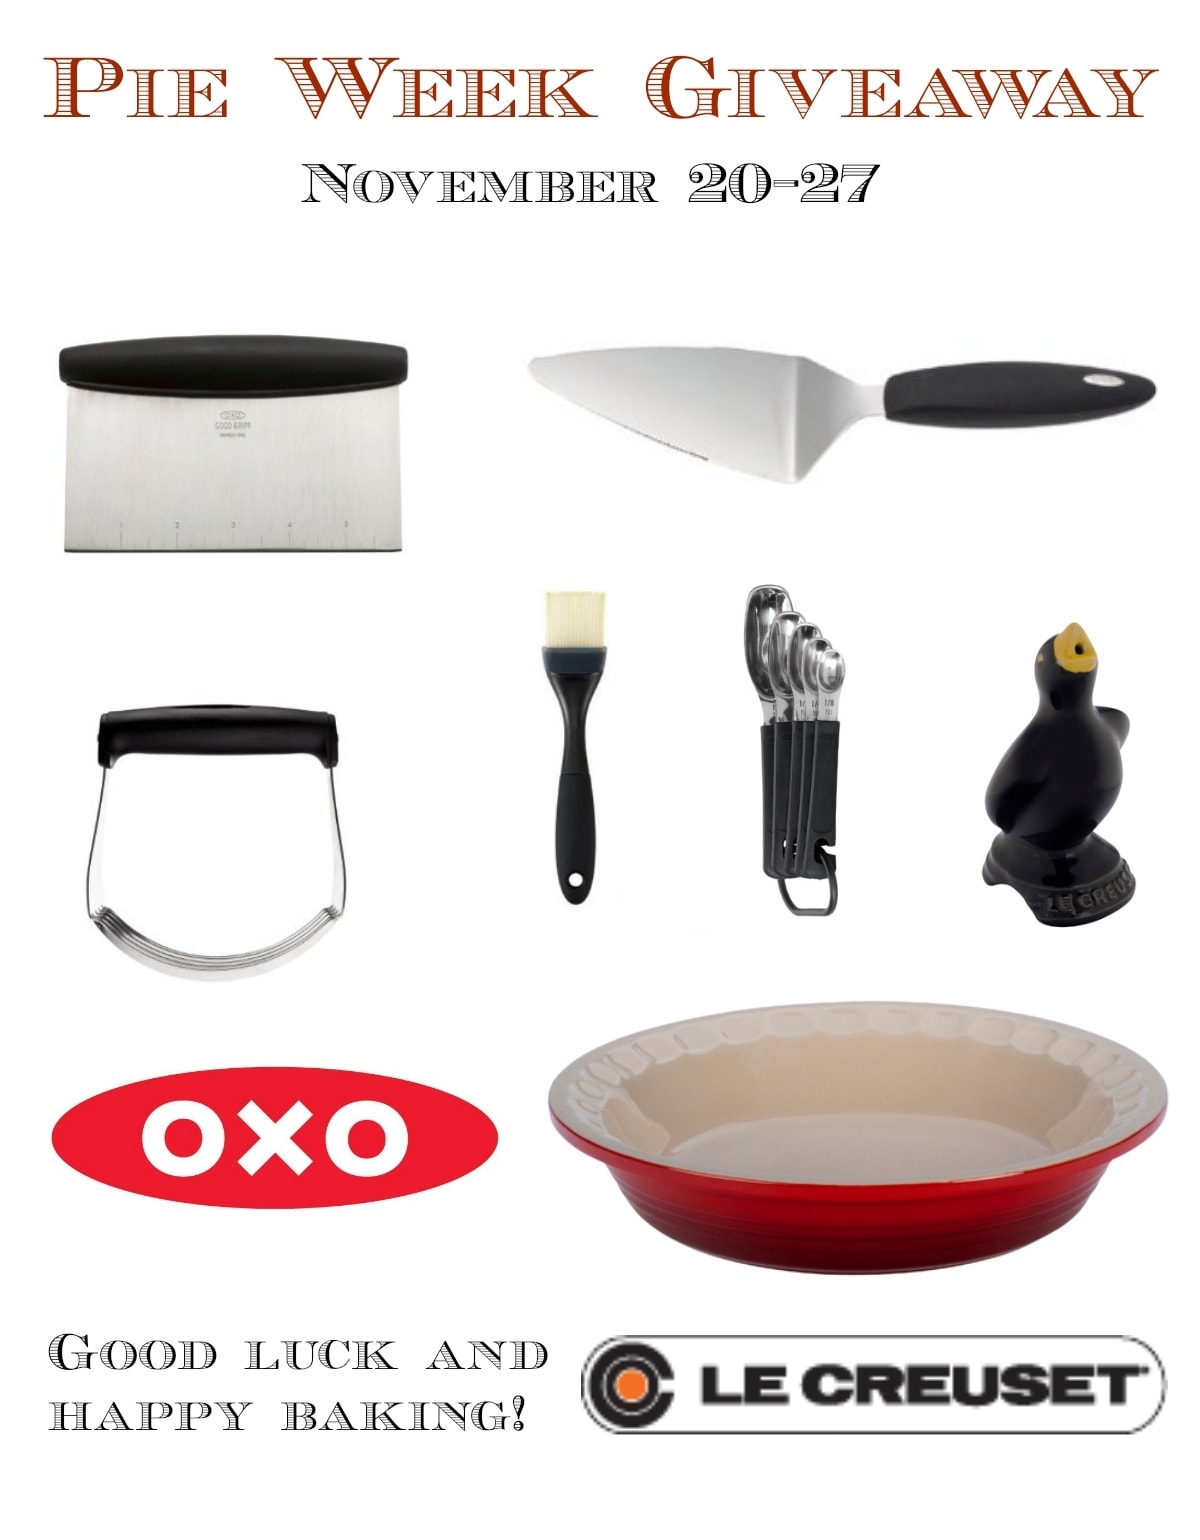 OXO and Le Creuset Pie Week Giveaways | Bake or Break